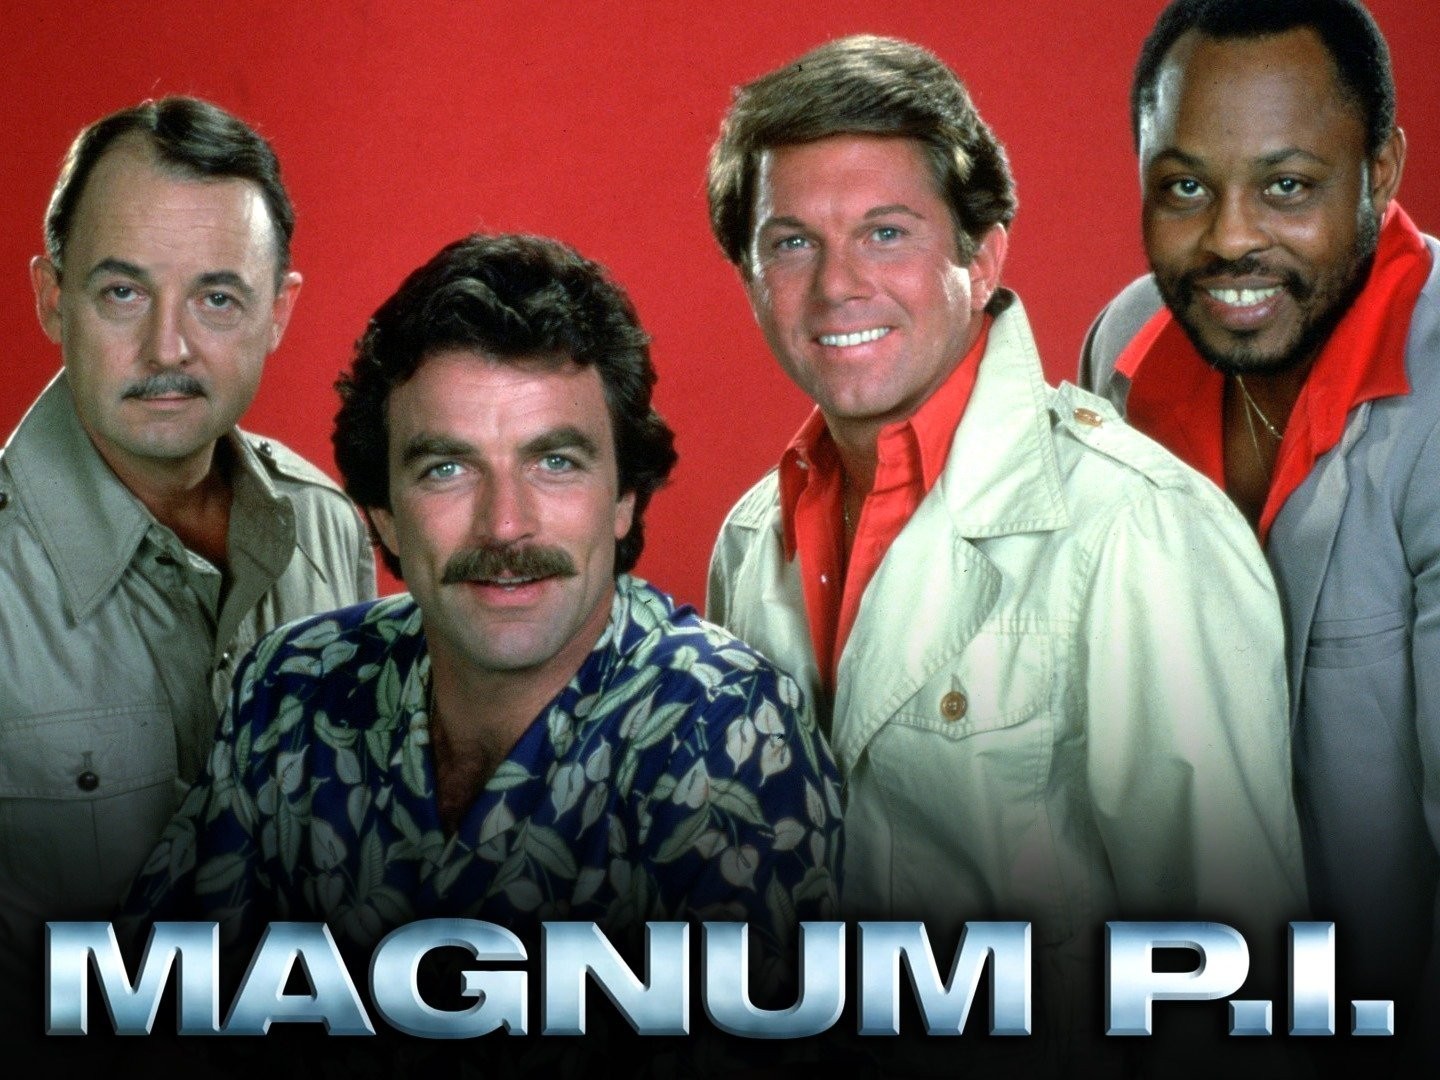 Magnum P.I. - About